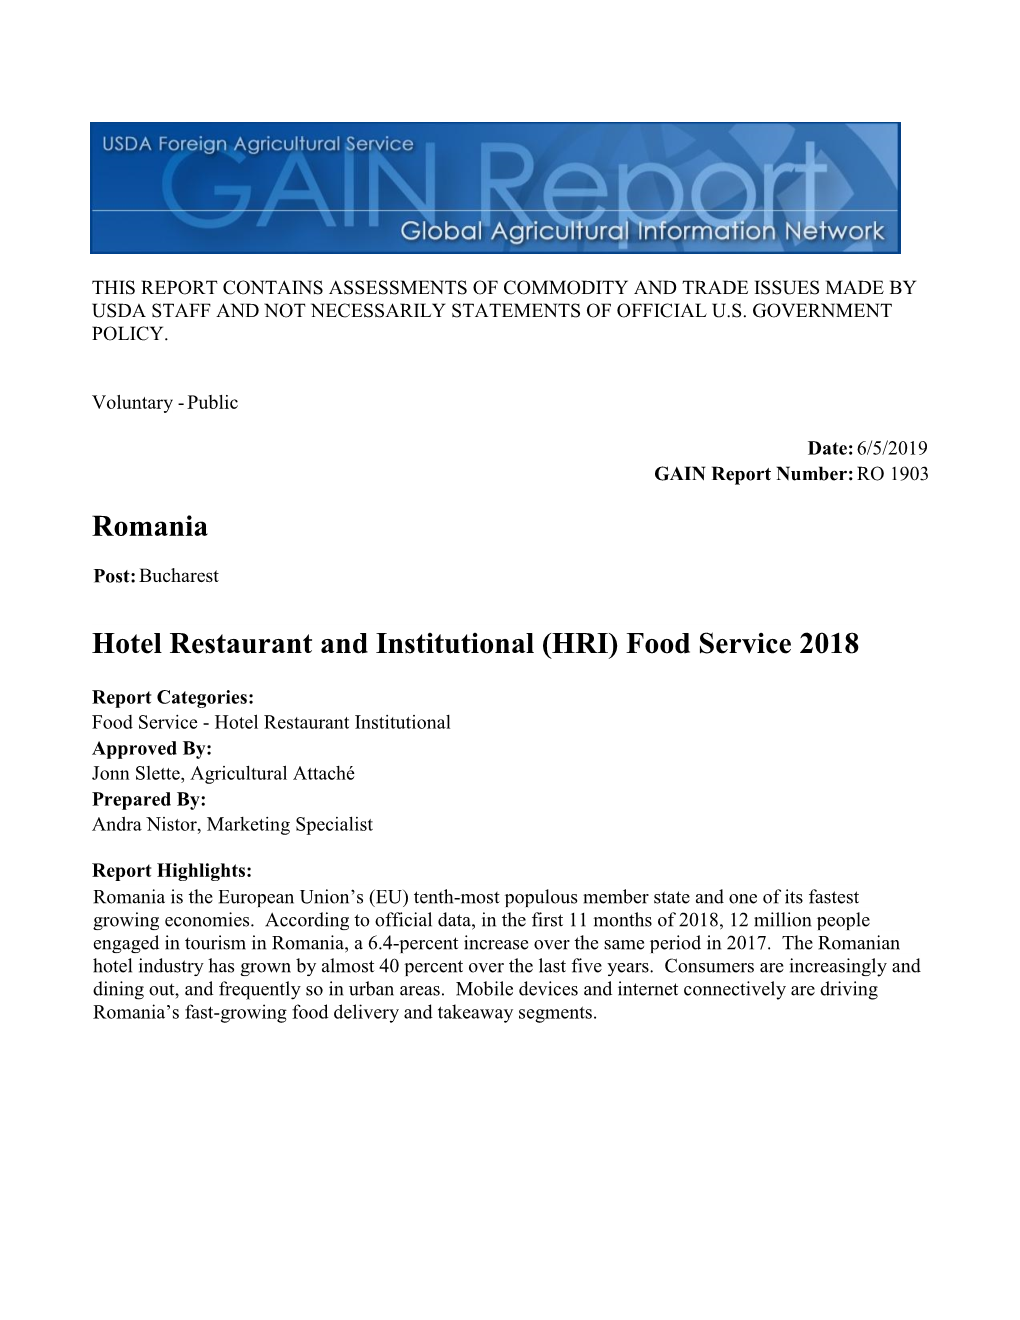 Romania Hotel Restaurant and Institutional (HRI) Food Service 2018